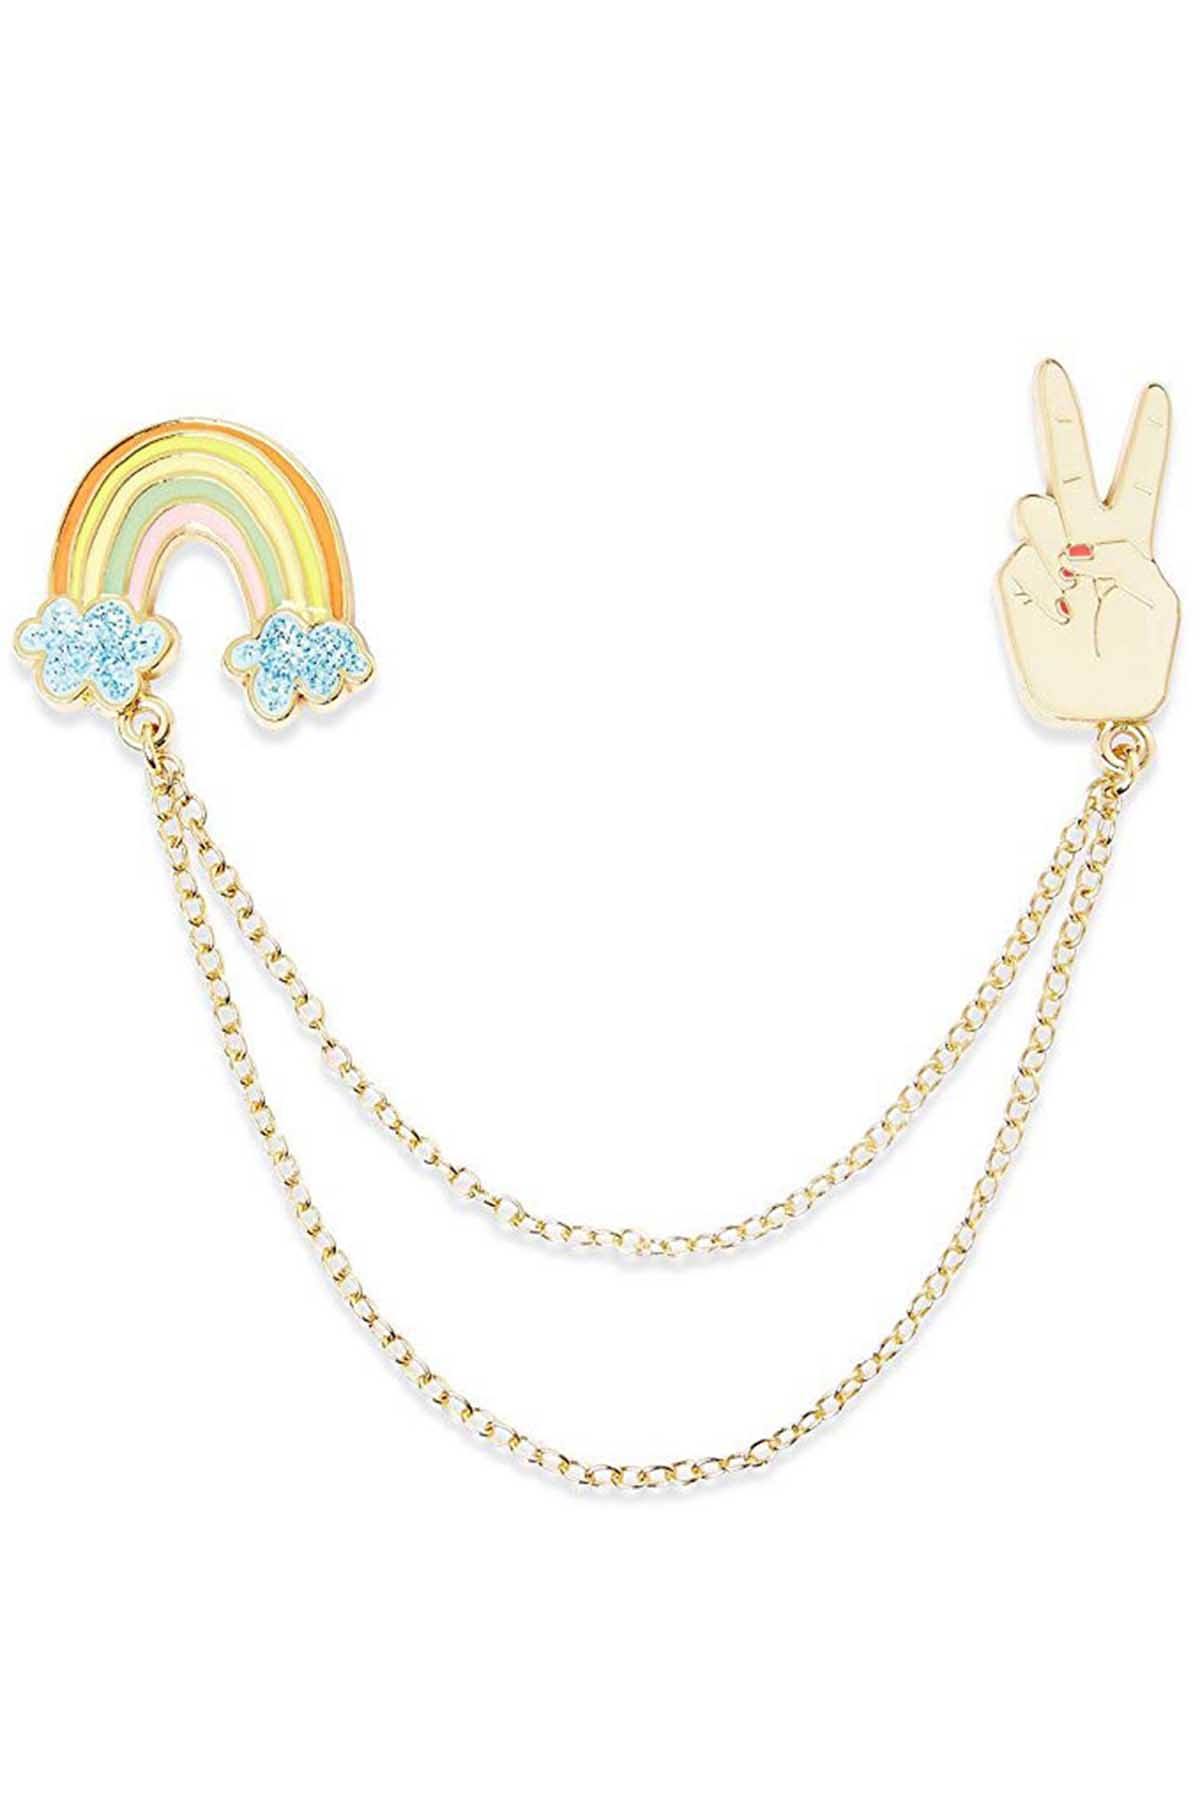 Celebrate Shop Rainbow Handbag Chain Accessory